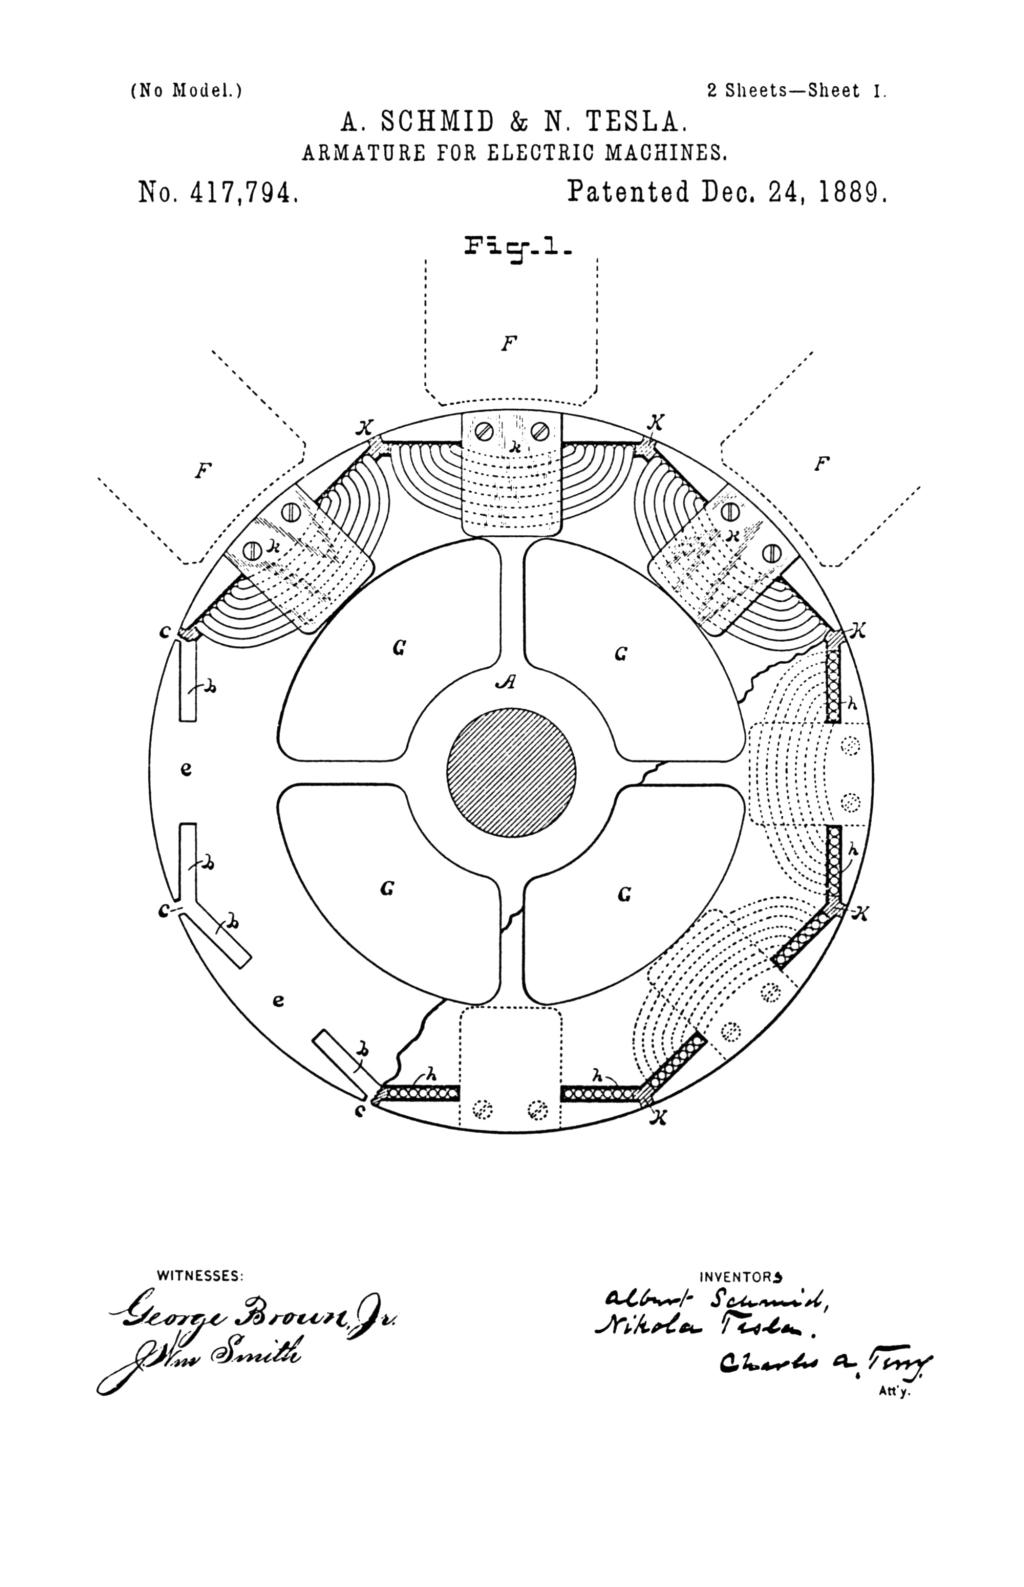 Nikola Tesla U.S. Patent 417,794 - Armature for Electric Machines - Image 1